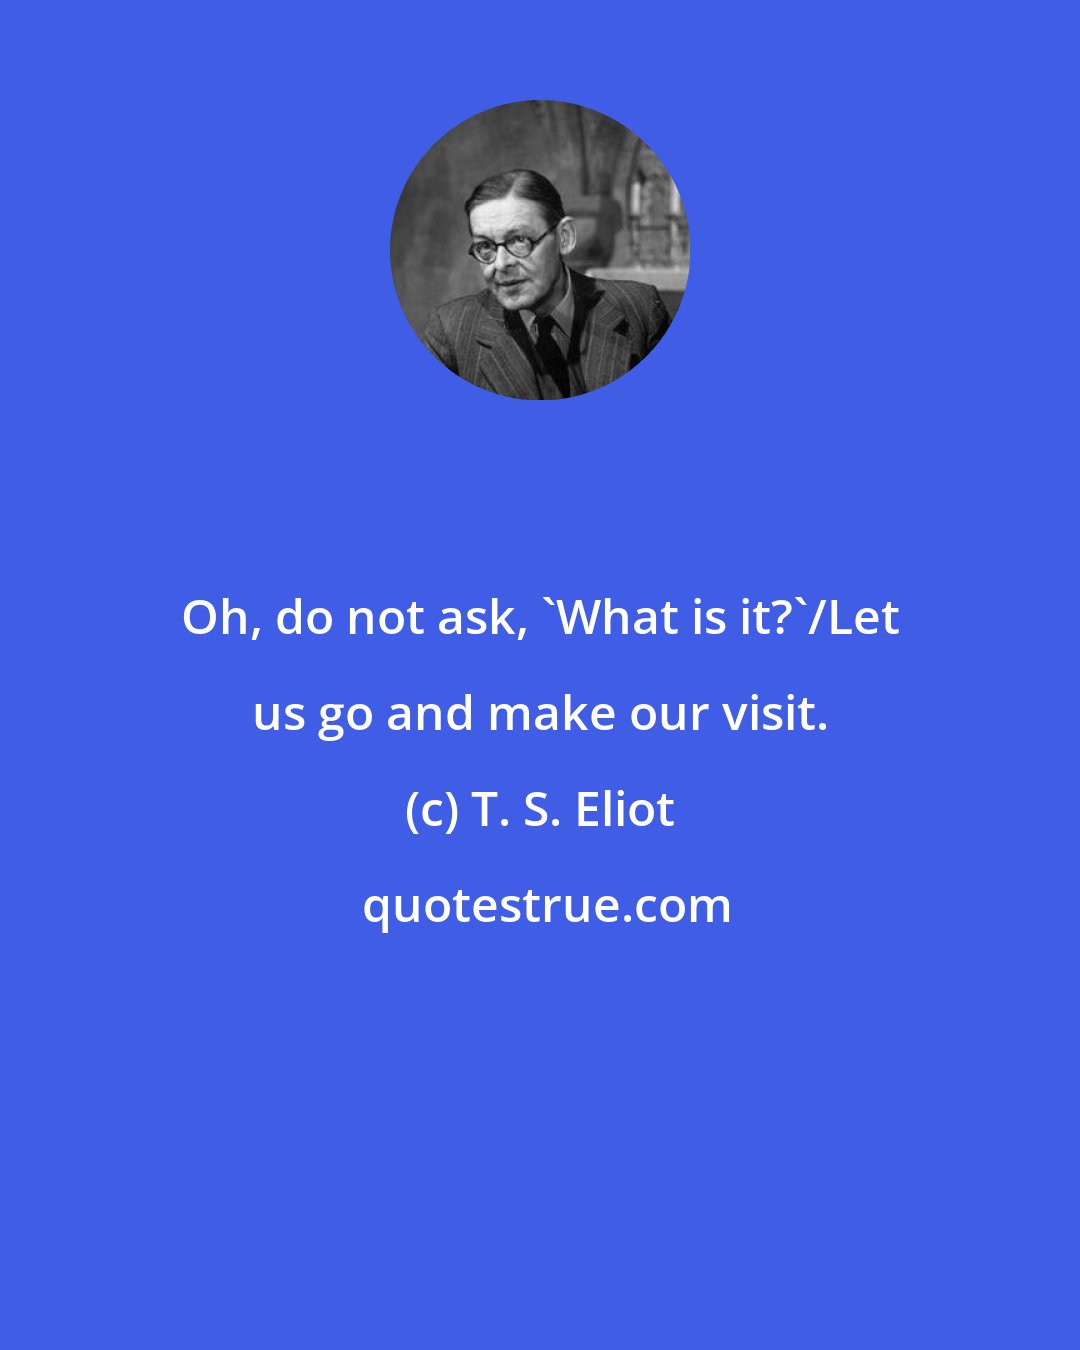 T. S. Eliot: Oh, do not ask, 'What is it?'/Let us go and make our visit.